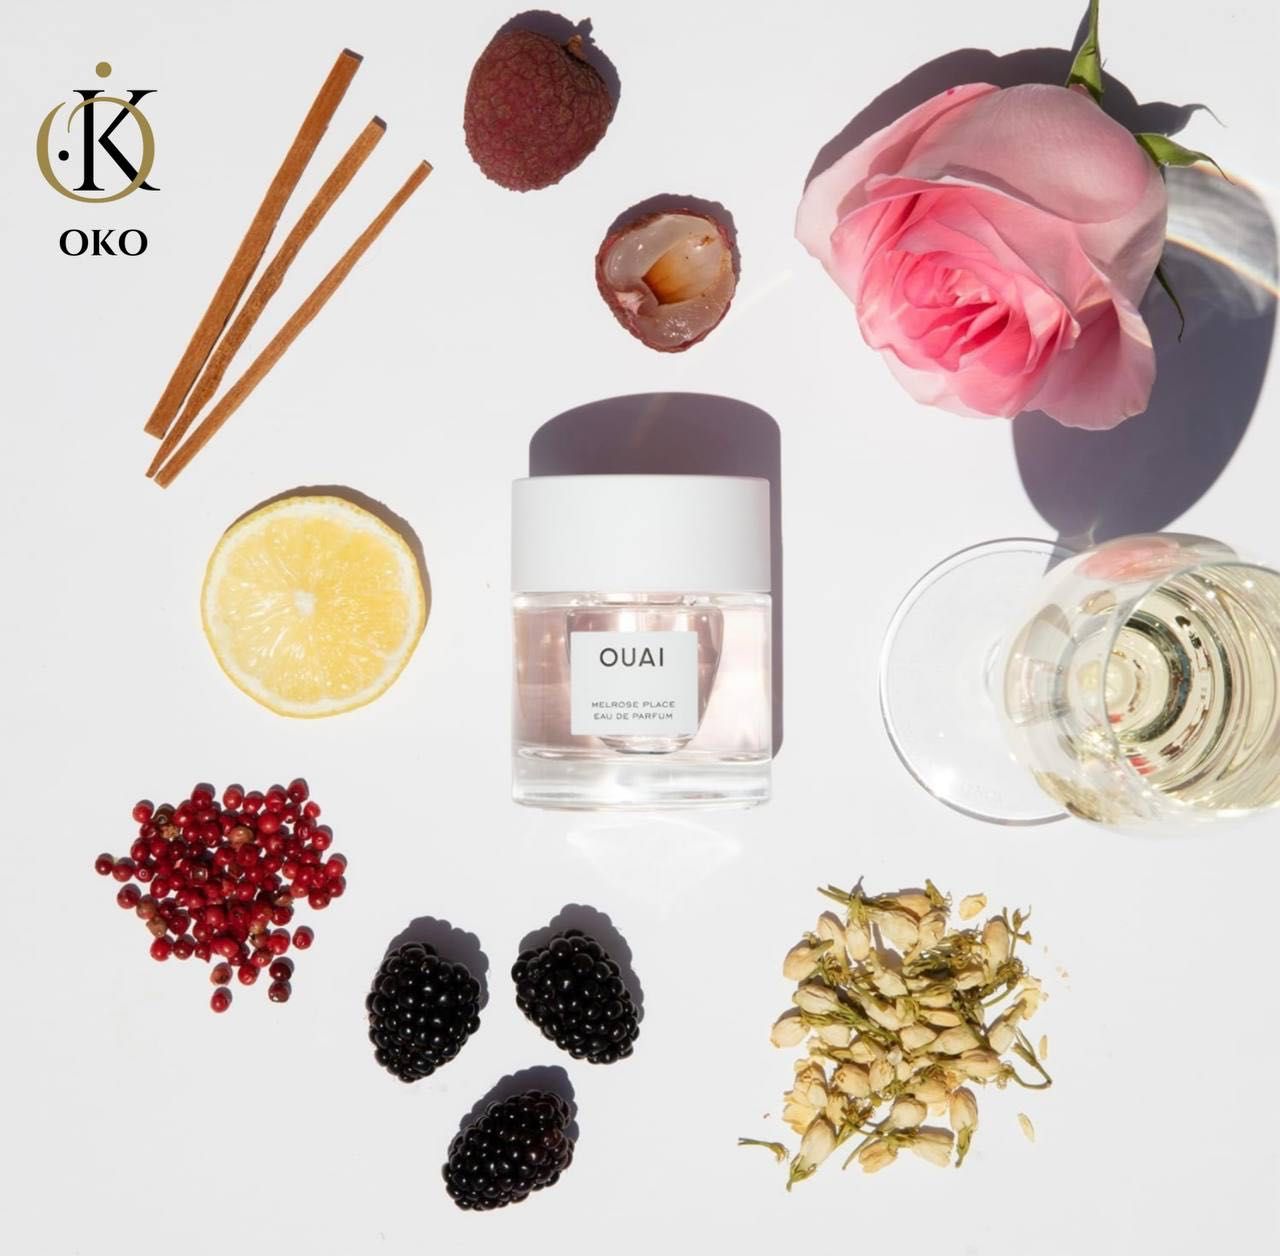 Подарок на 8 Марта by «OKO»
Парфюм «OUAI» Melrose Place
(Parfum)